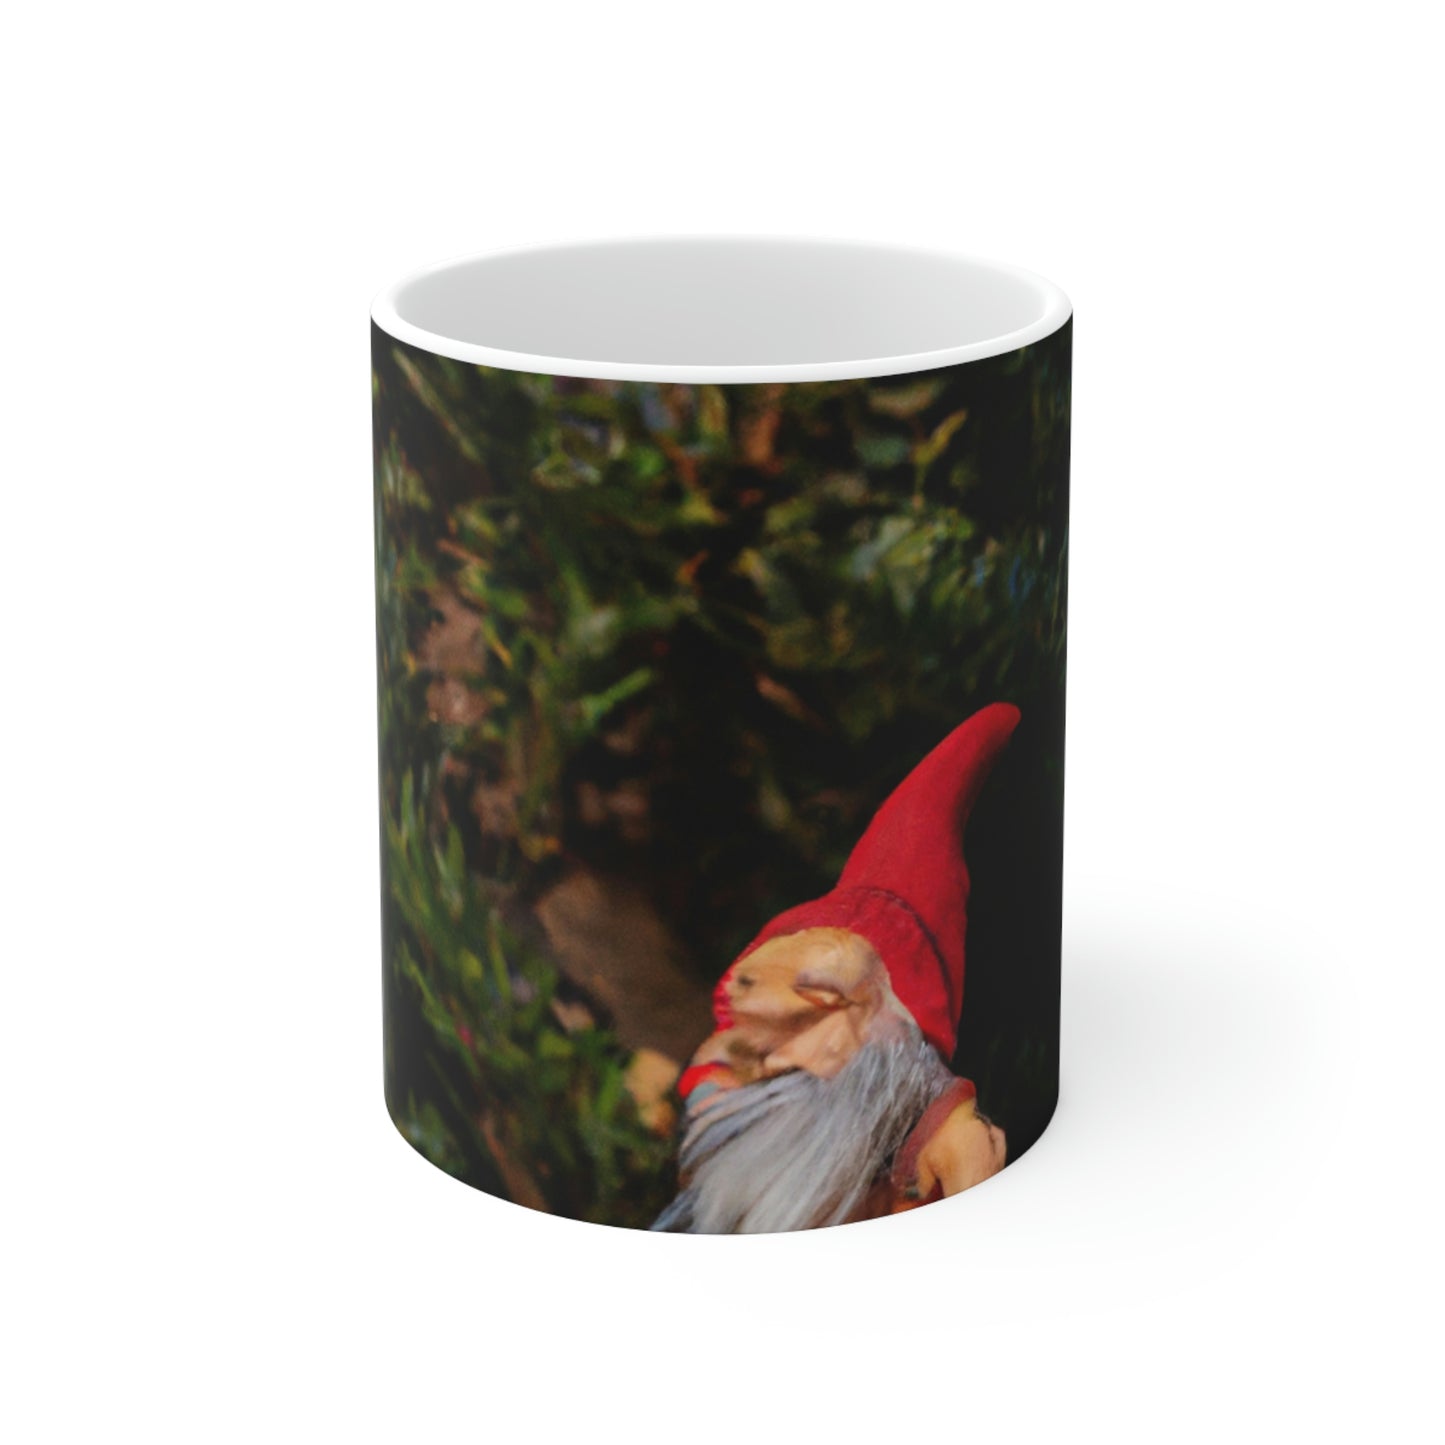 The Gnome's High-Rise Adventure - The Alien Ceramic Mug 11 oz